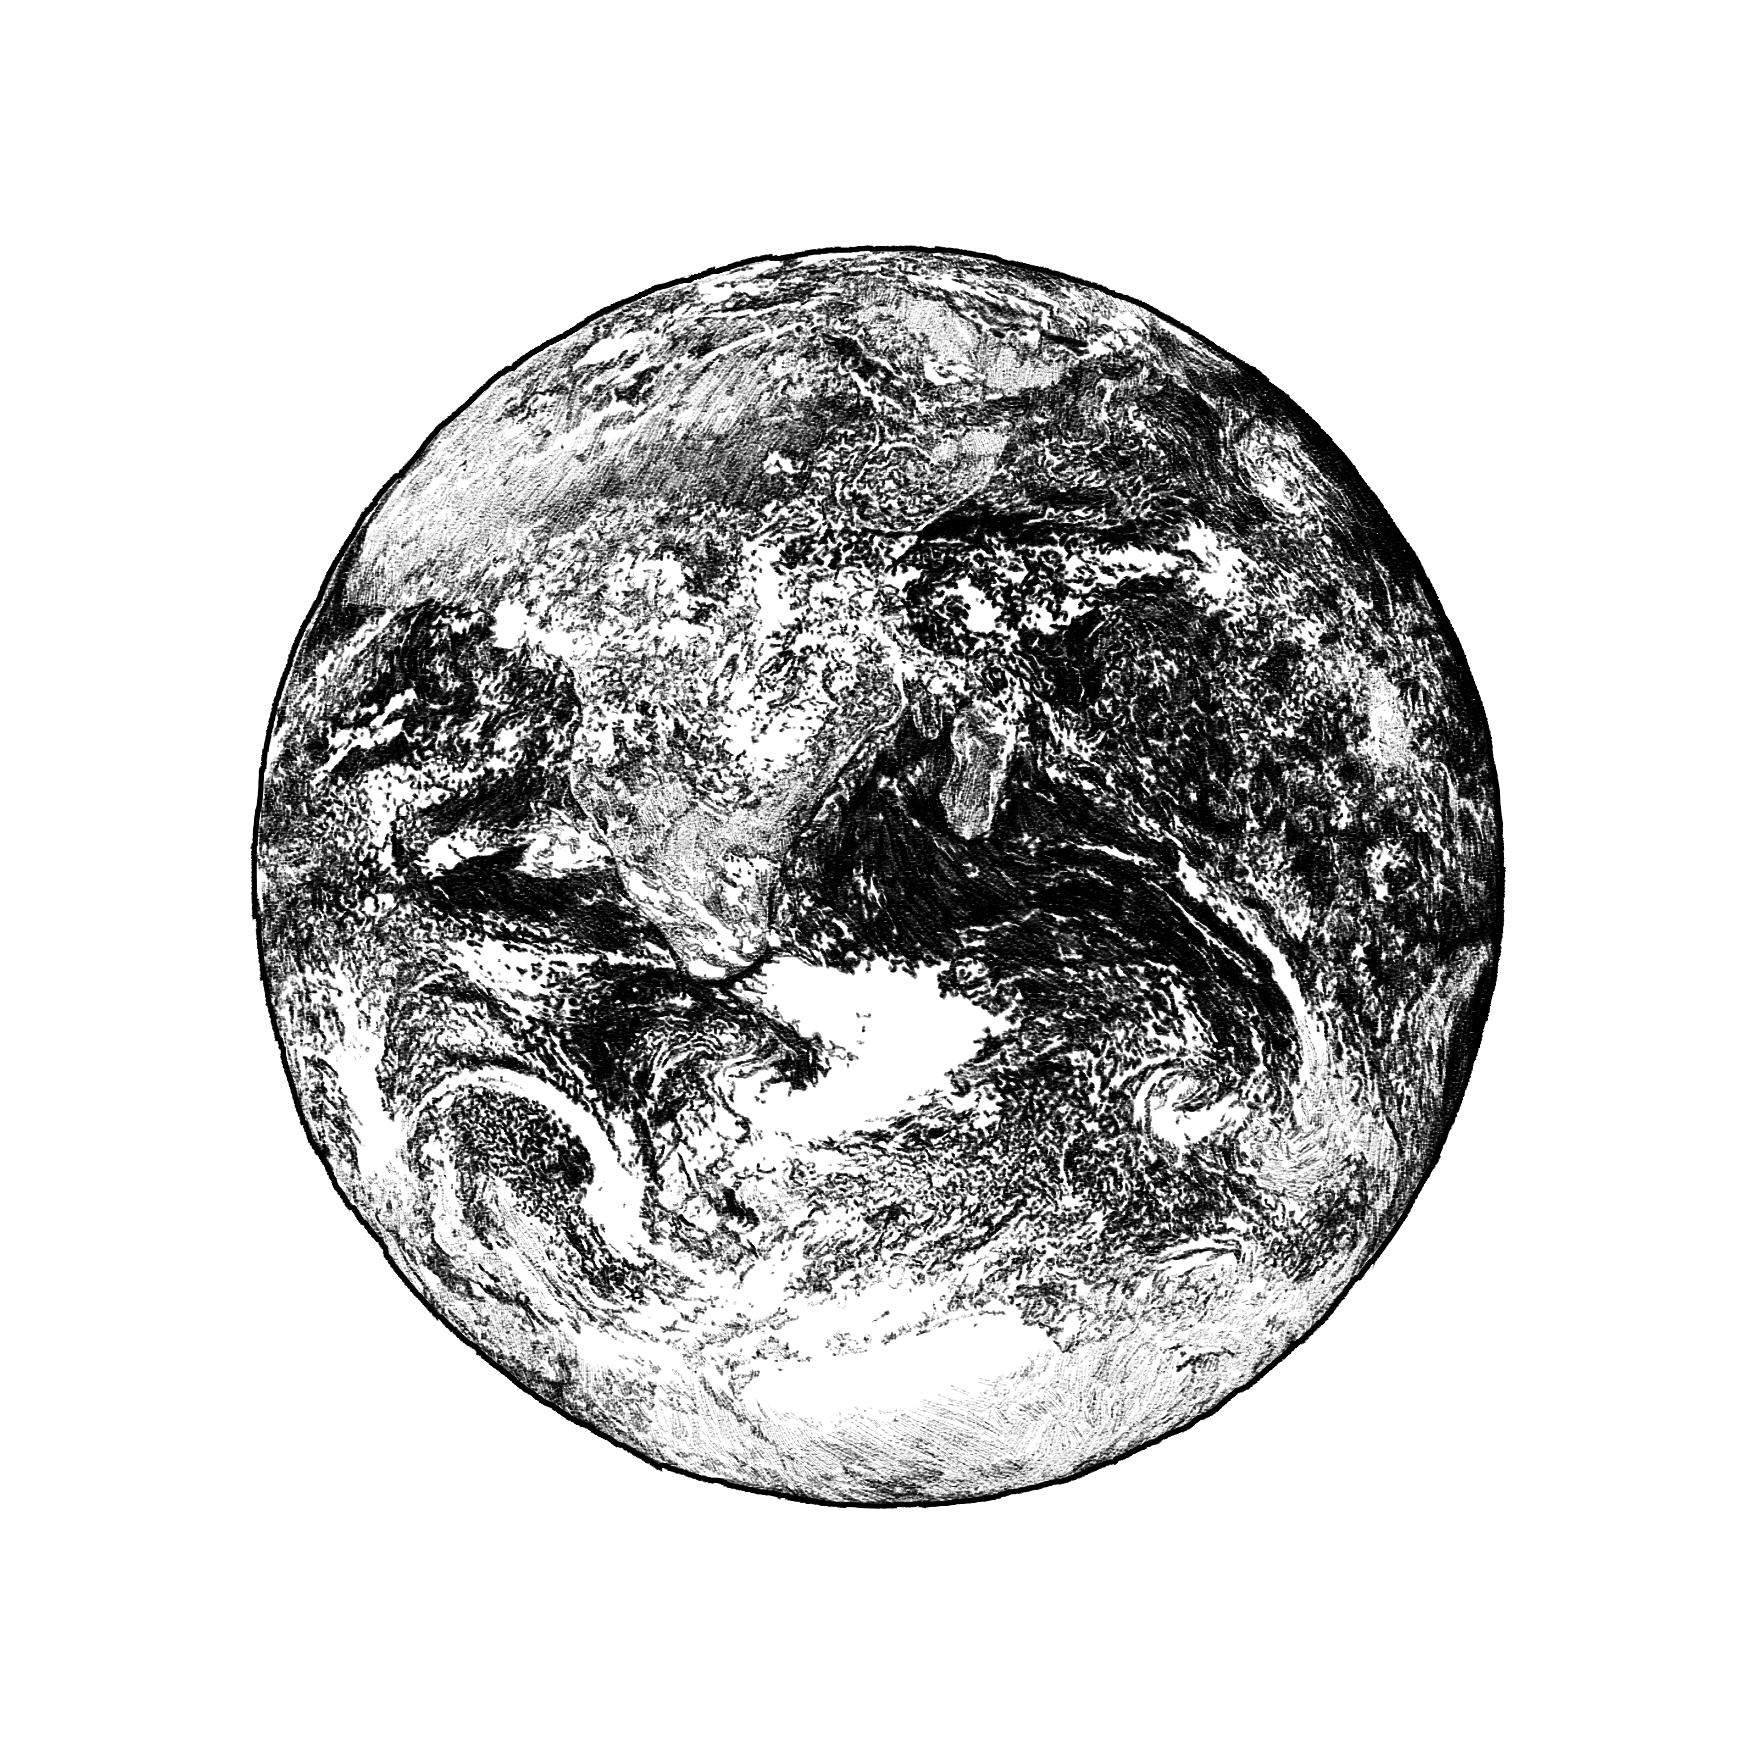 Earth Planet Illustration